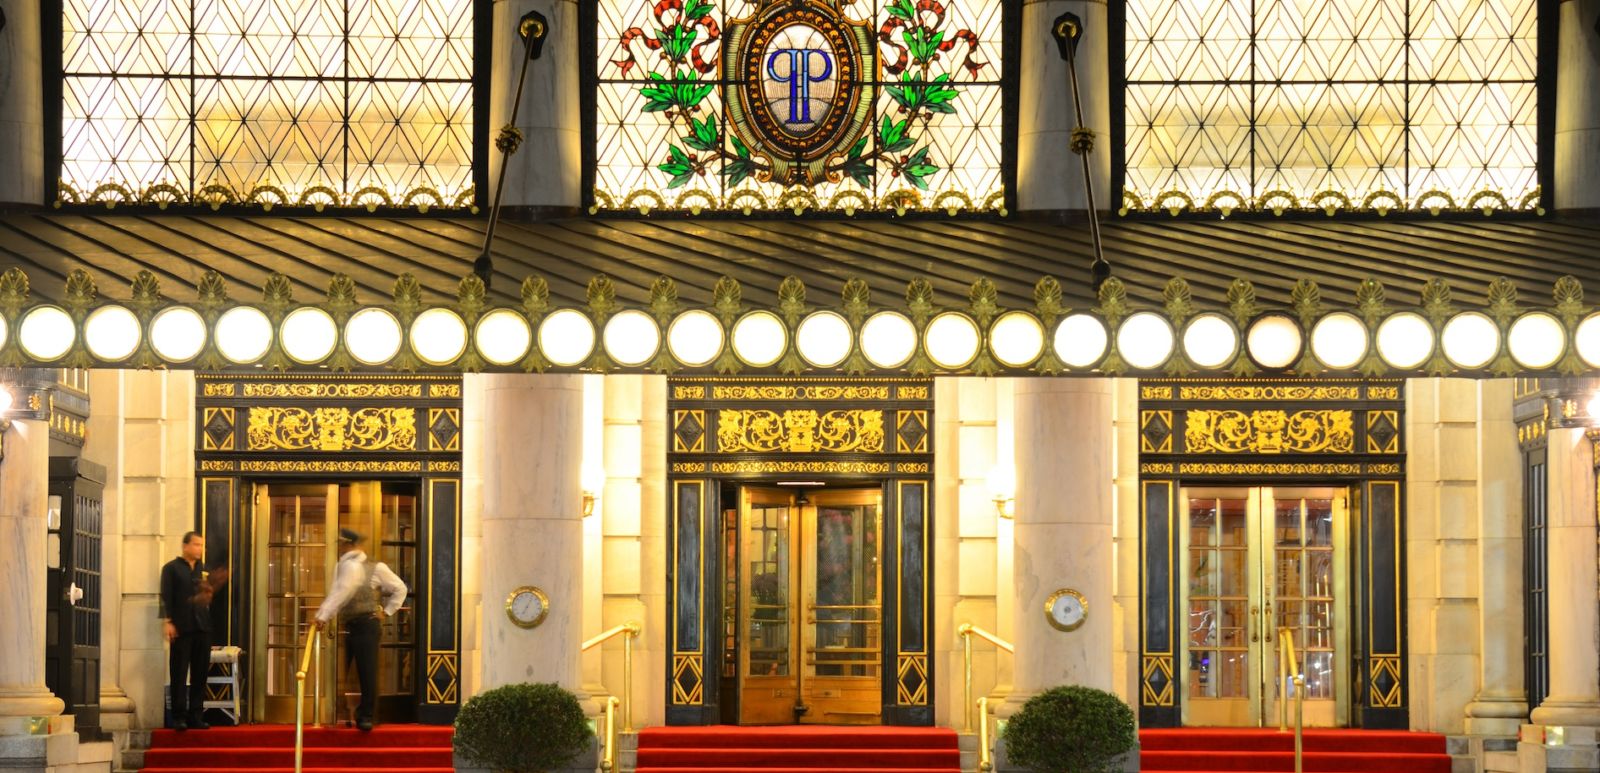 The Plaza Hotel in NYC. Photo via Shutterstock.